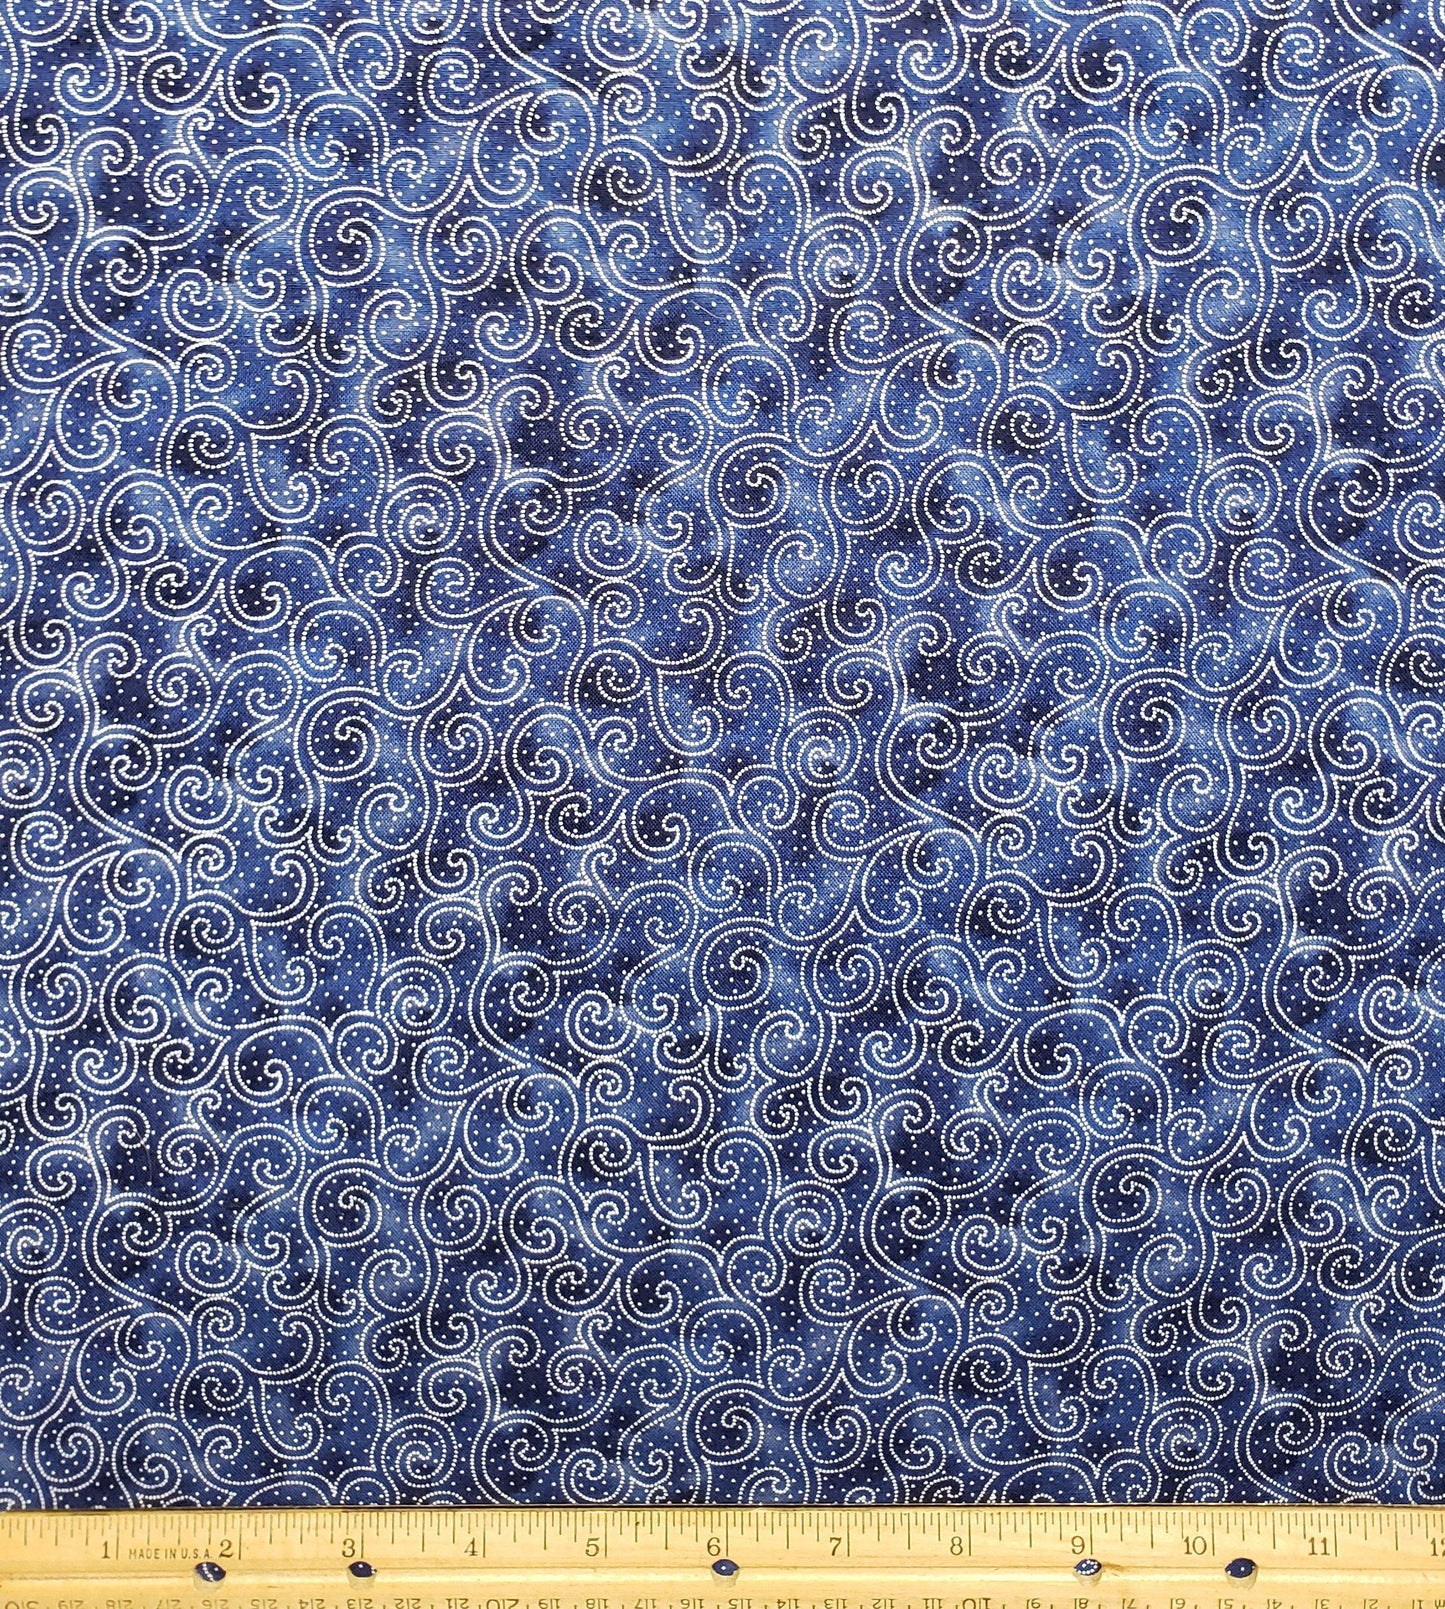 EOB - JoAnn Screen Print D# 4742 "Quilters Spectrum" - Mottled Dark Blue Fabric with White Dot Scroll Pattern